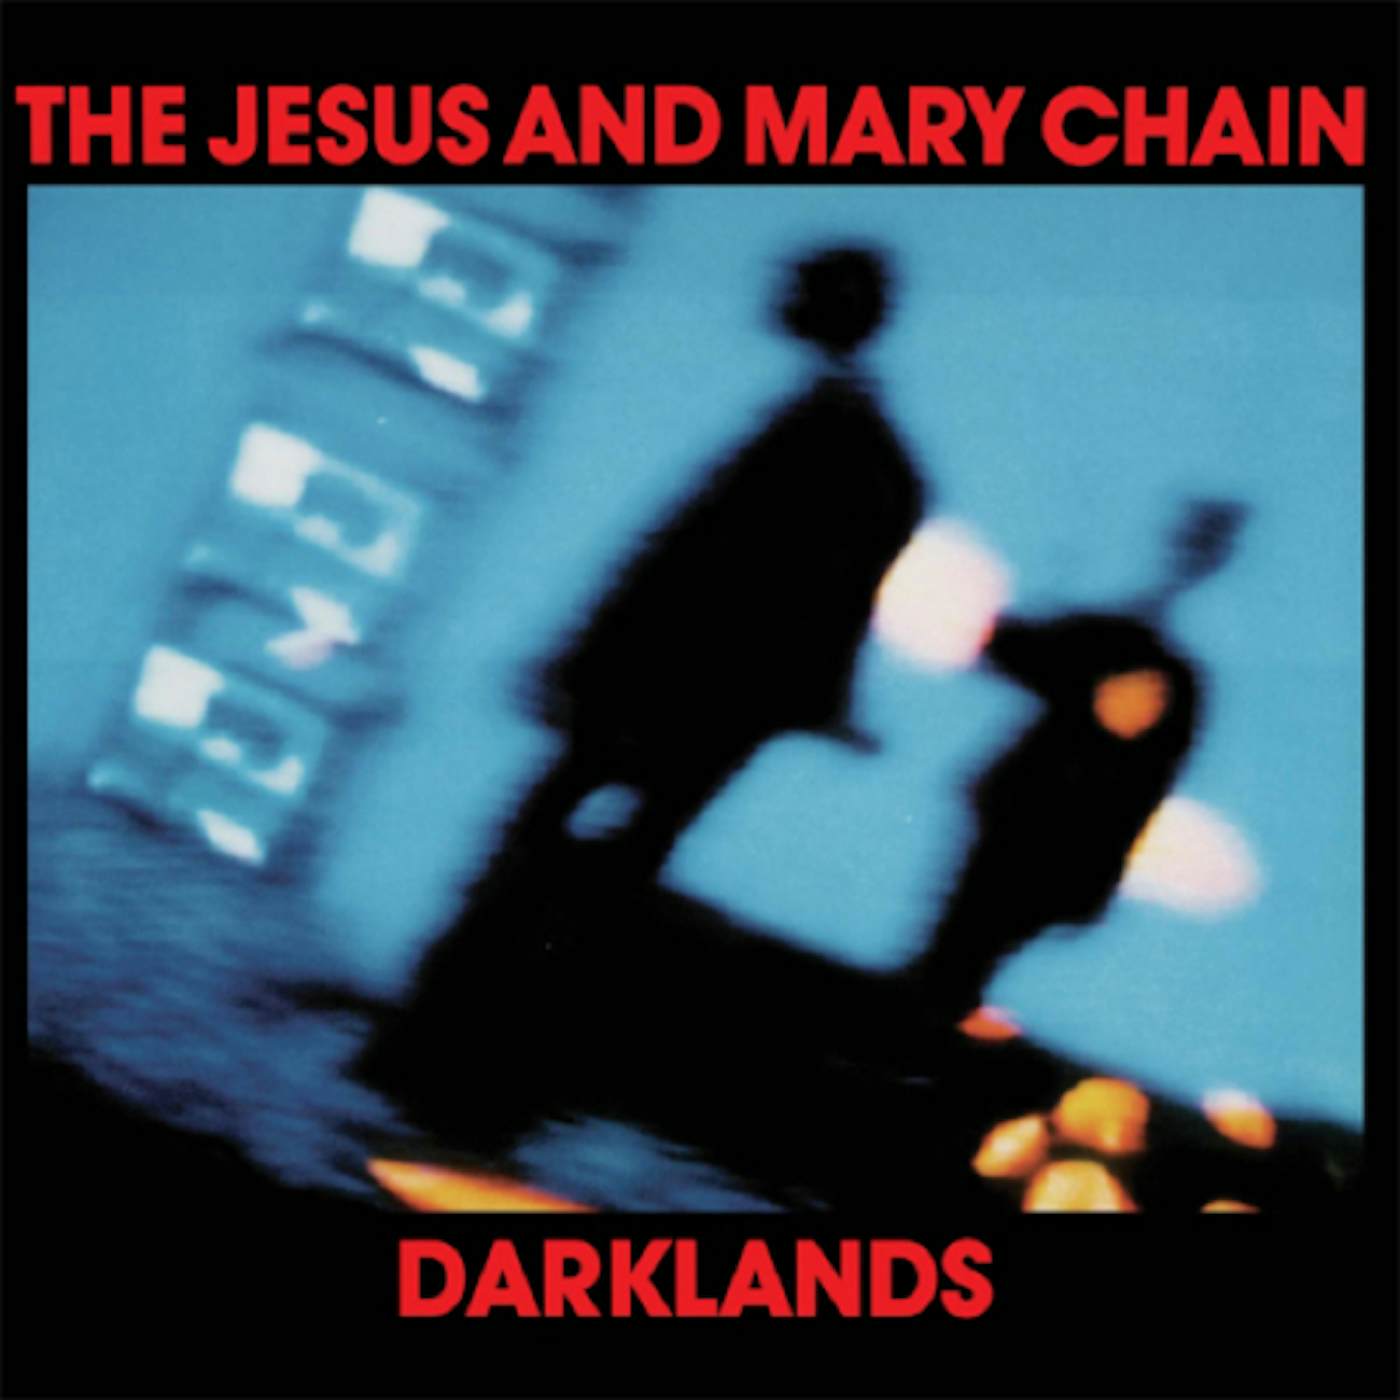 The Jesus and Mary Chain Darklands Vinyl Record